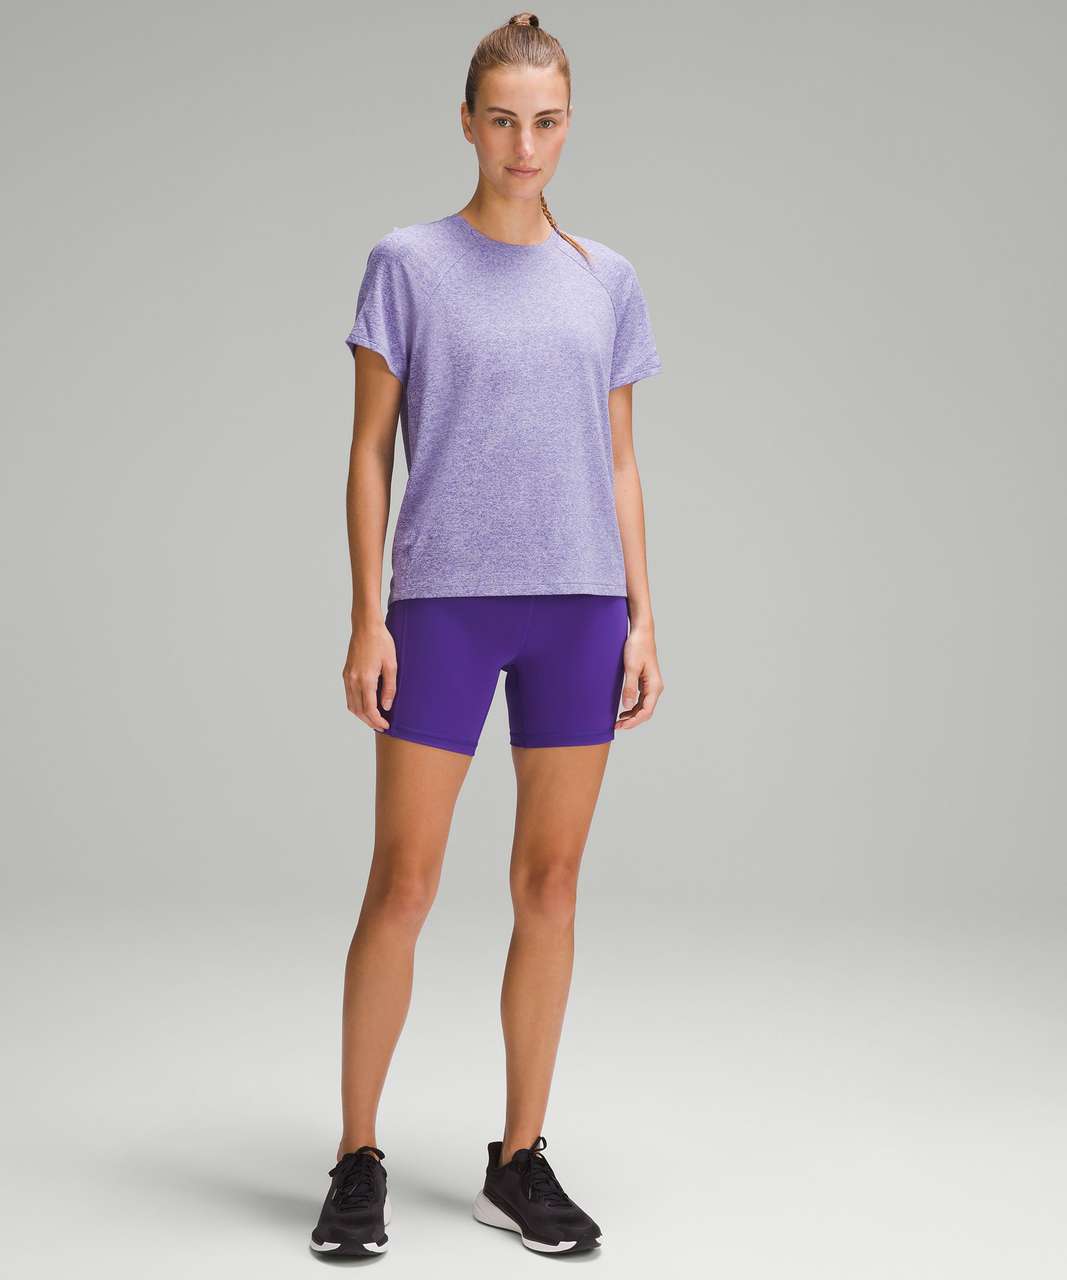 Lululemon License to Train Classic-Fit T-Shirt - Heathered Petrol Purple